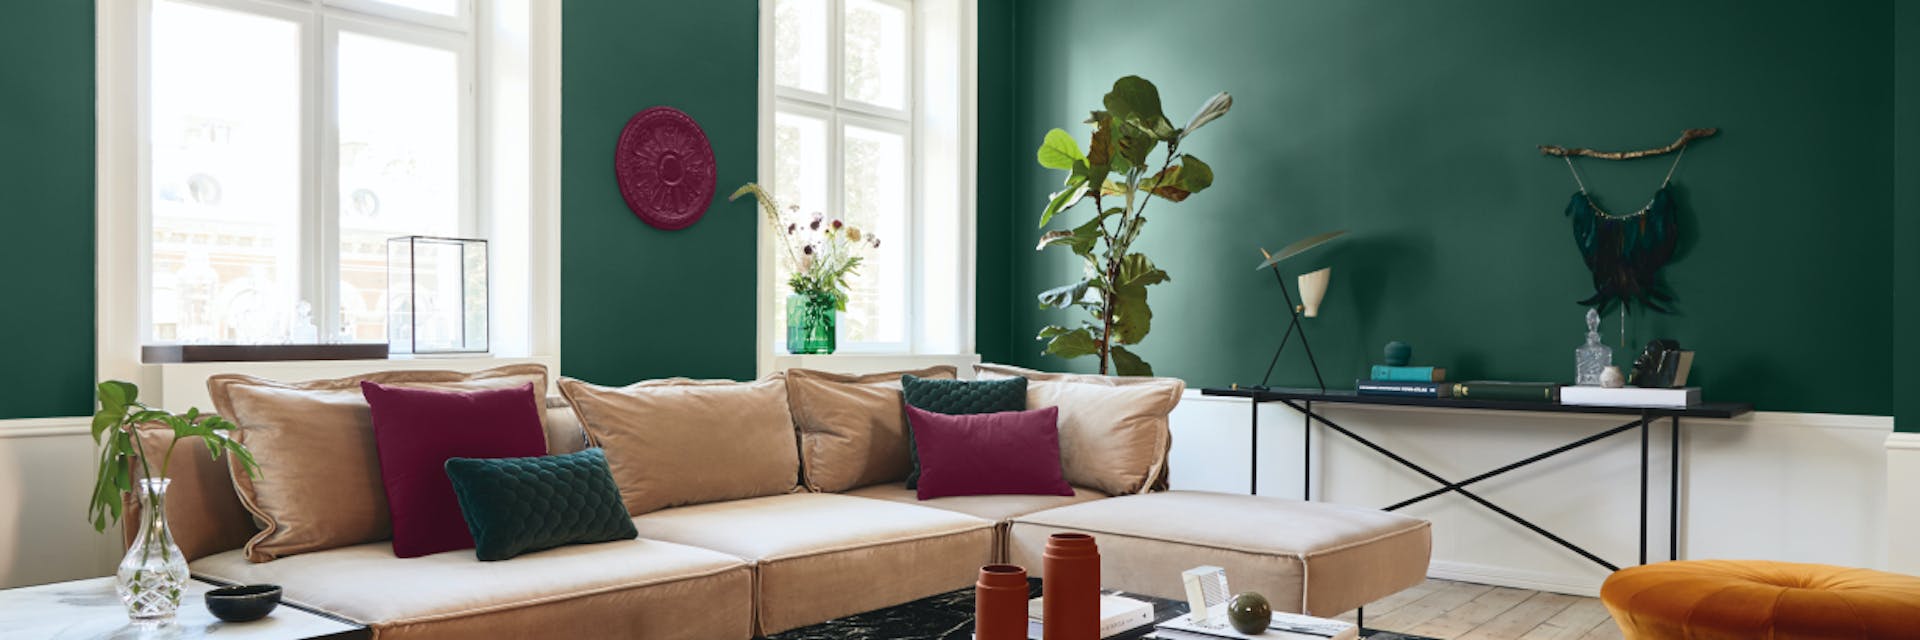 A green feature ceiling alongside green walls often looks refreshing.